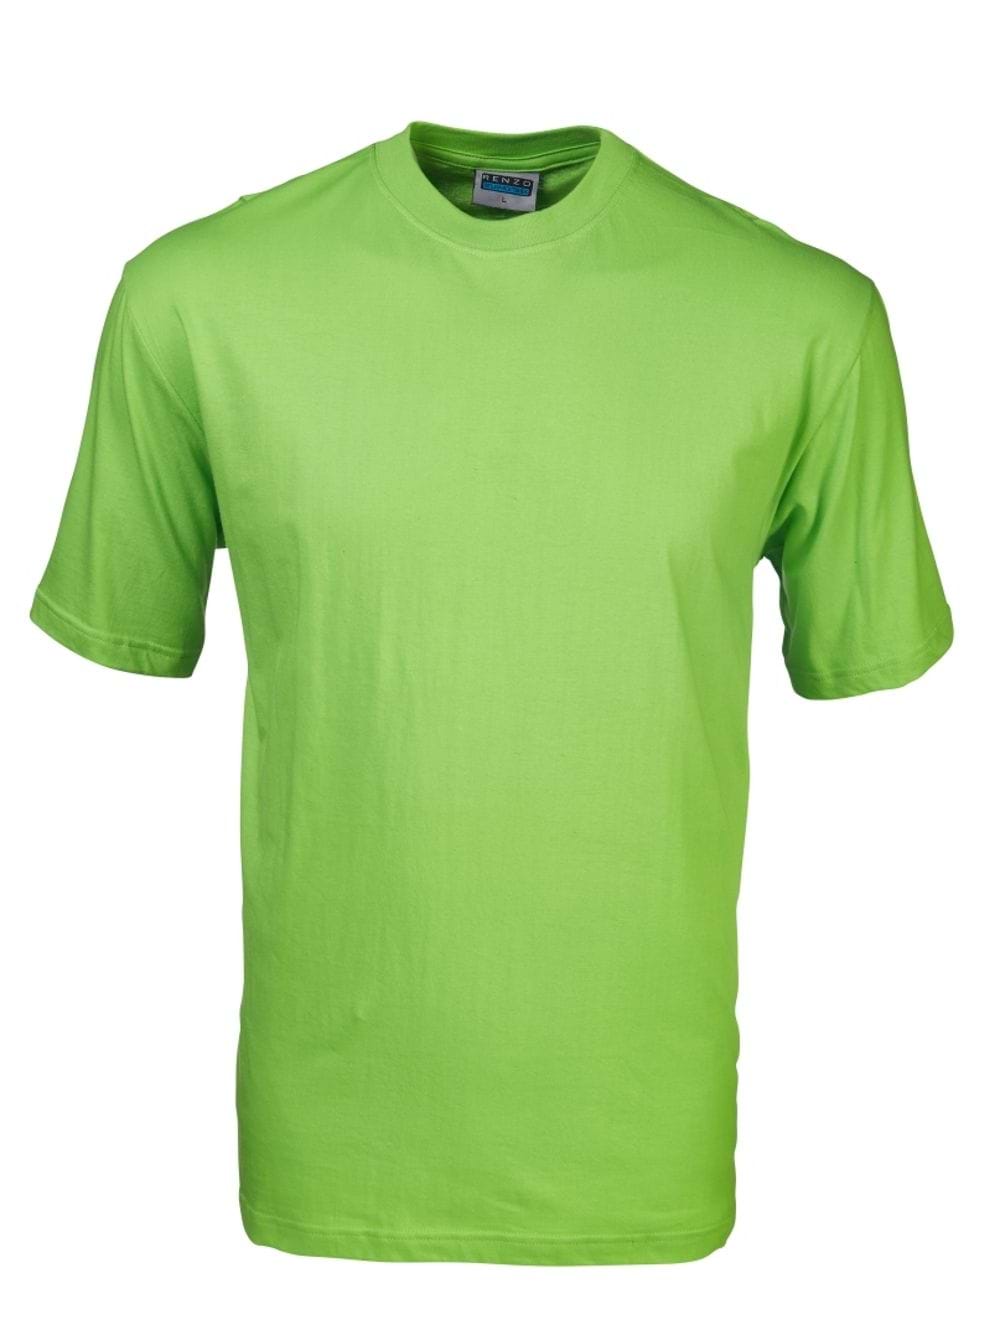 165G Crew Neck T-Shirt - Lime Green / M